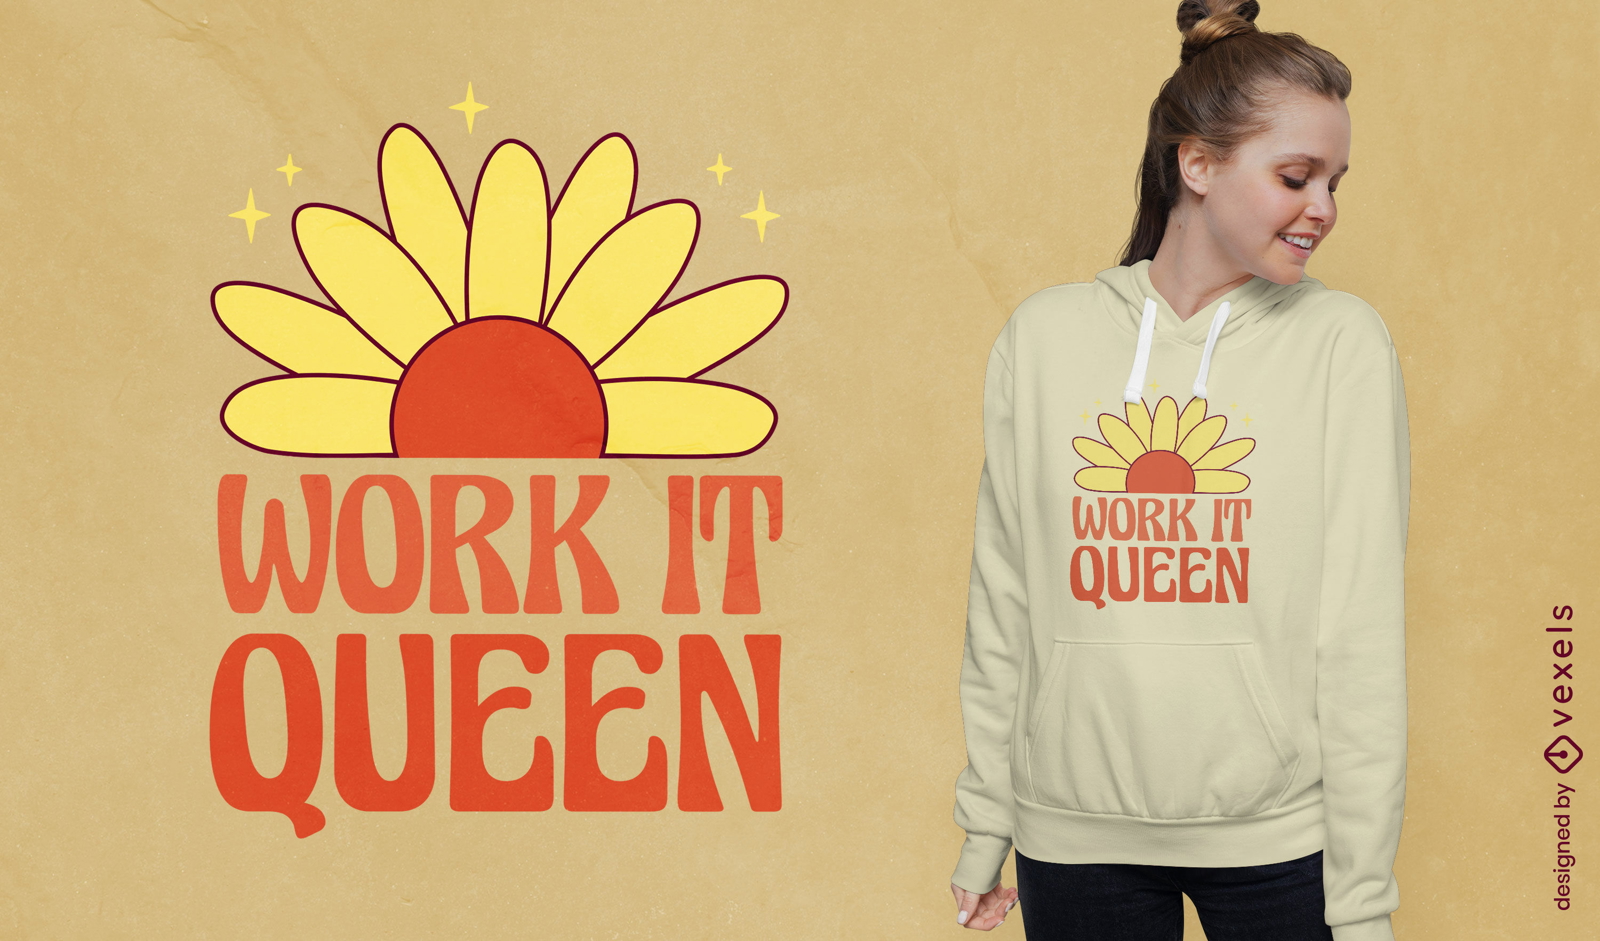 Work it Queen feministisches Zitat-T-Shirt-Design